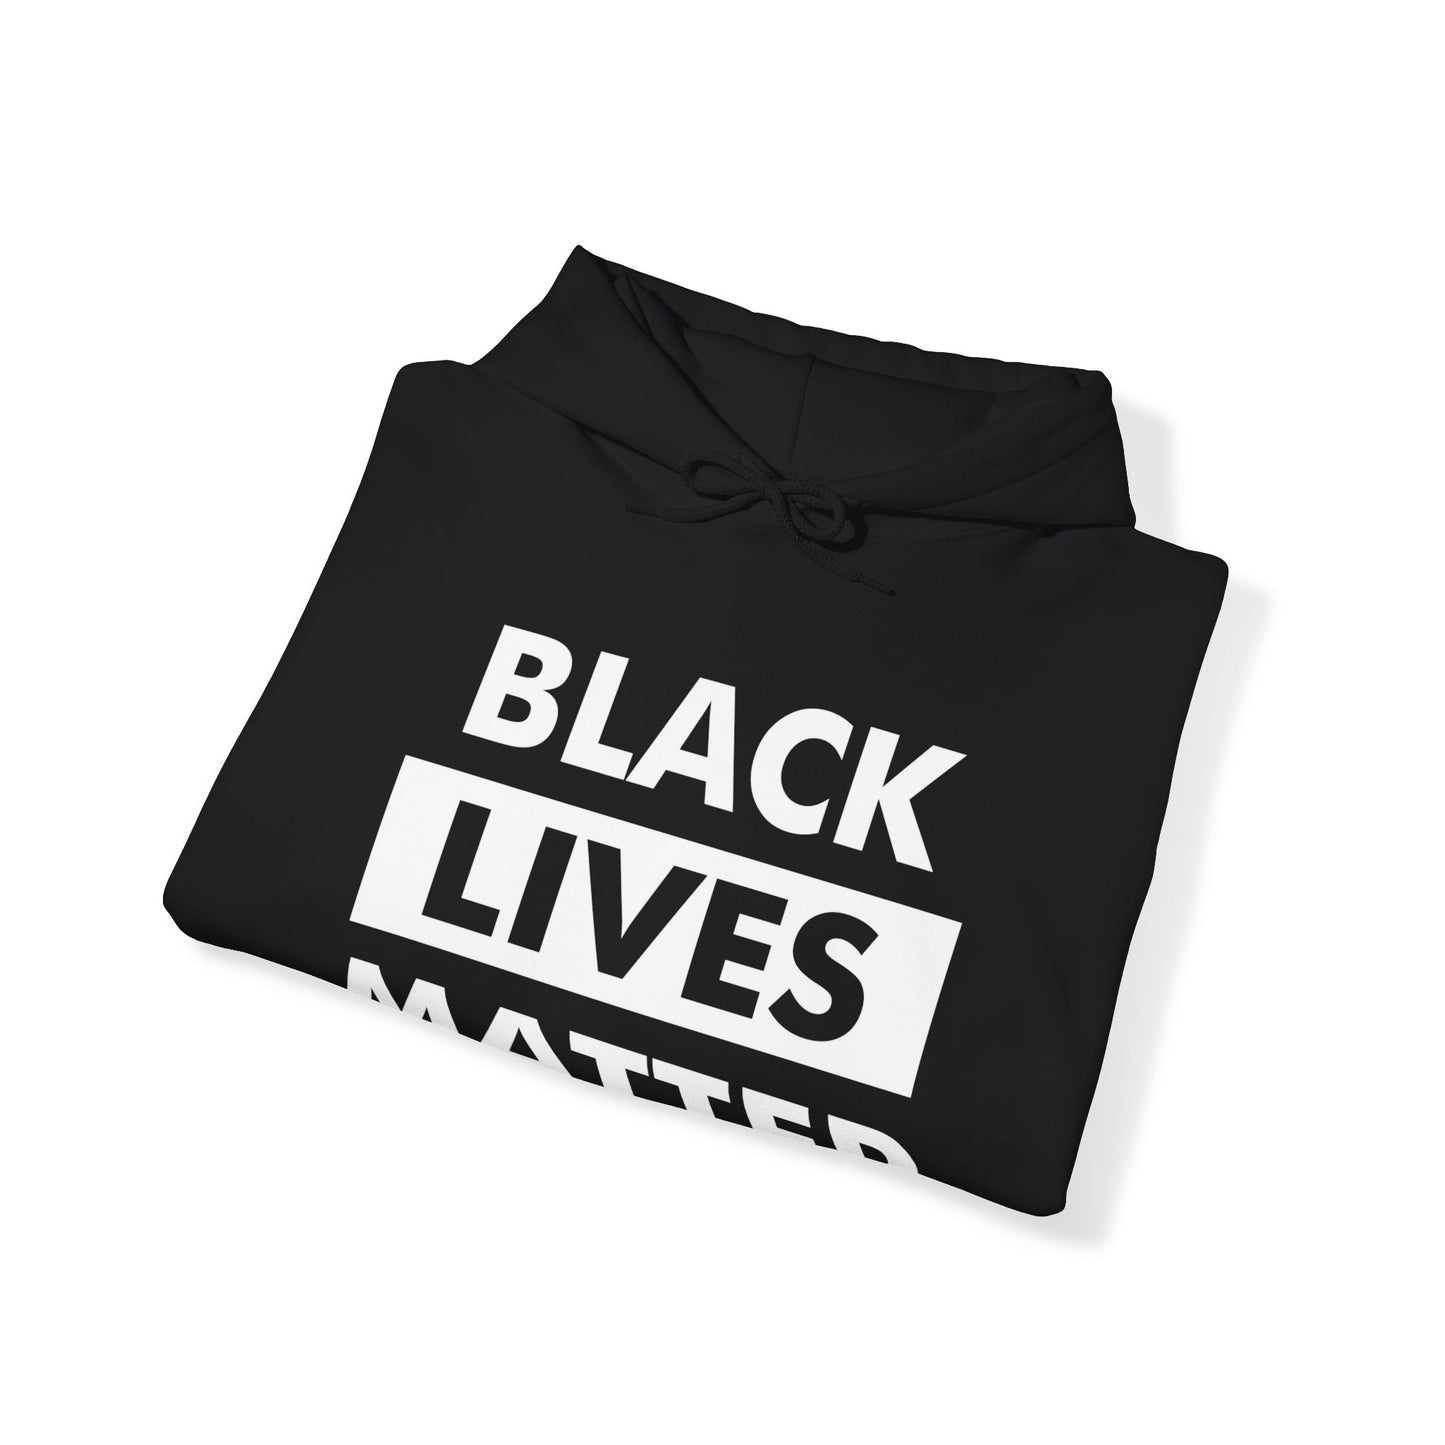 “Black Lives Matter” Unisex Hoodie